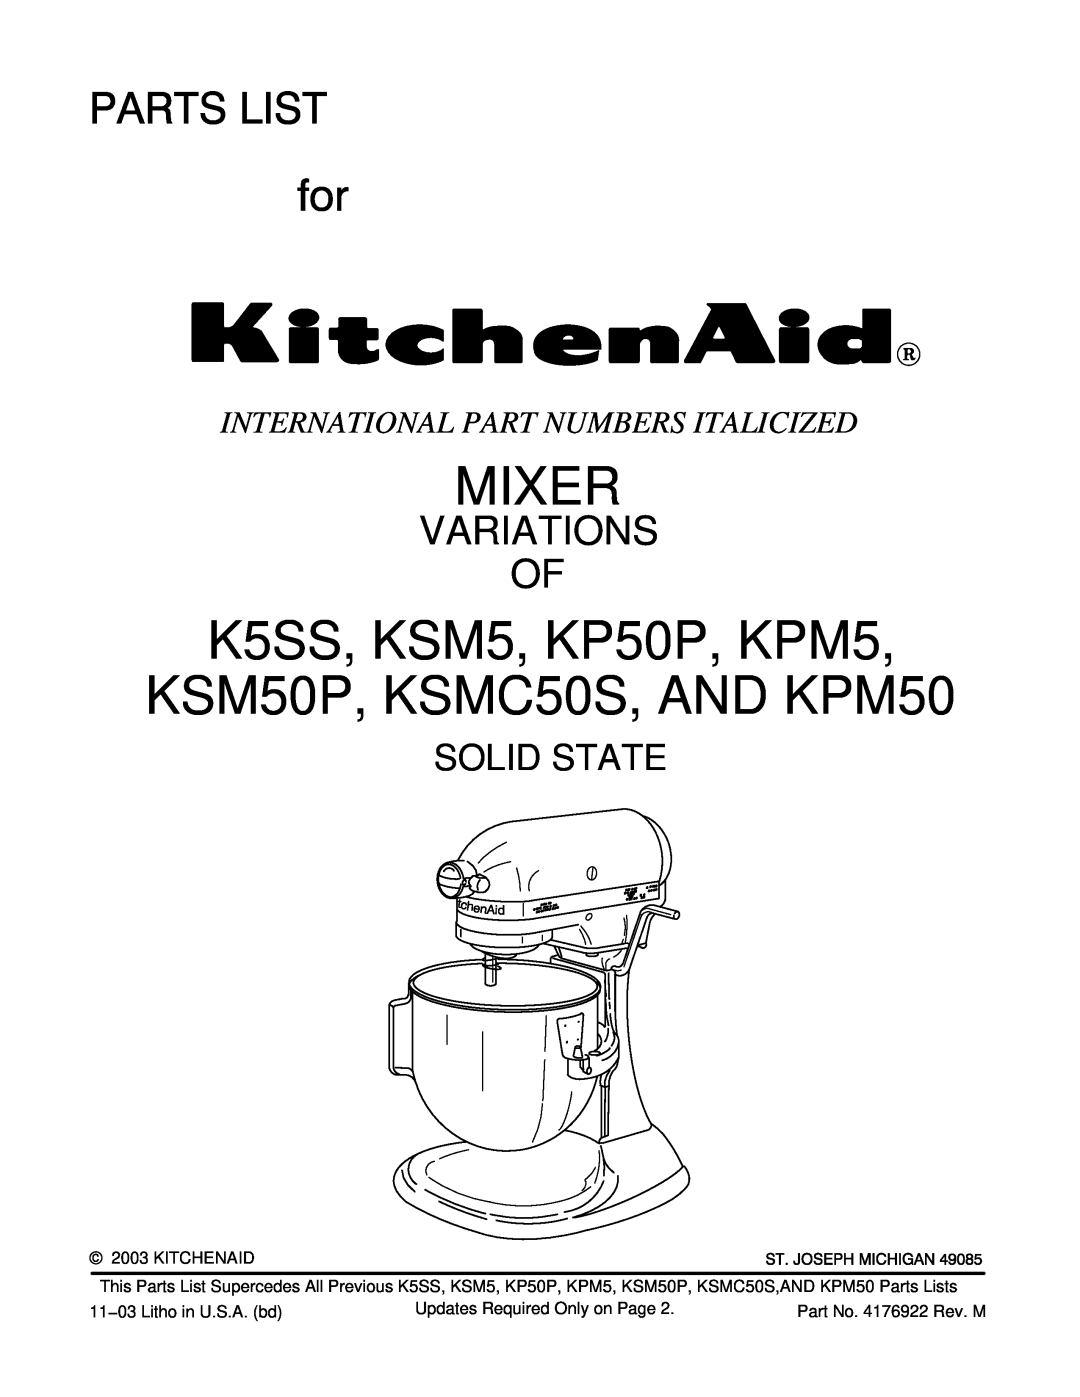 KitchenAid manual Mixer, K5SS, KSM5, KP50P, KPM5 KSM50P, KSMC50S, AND KPM50, Variations Of, Solid State 